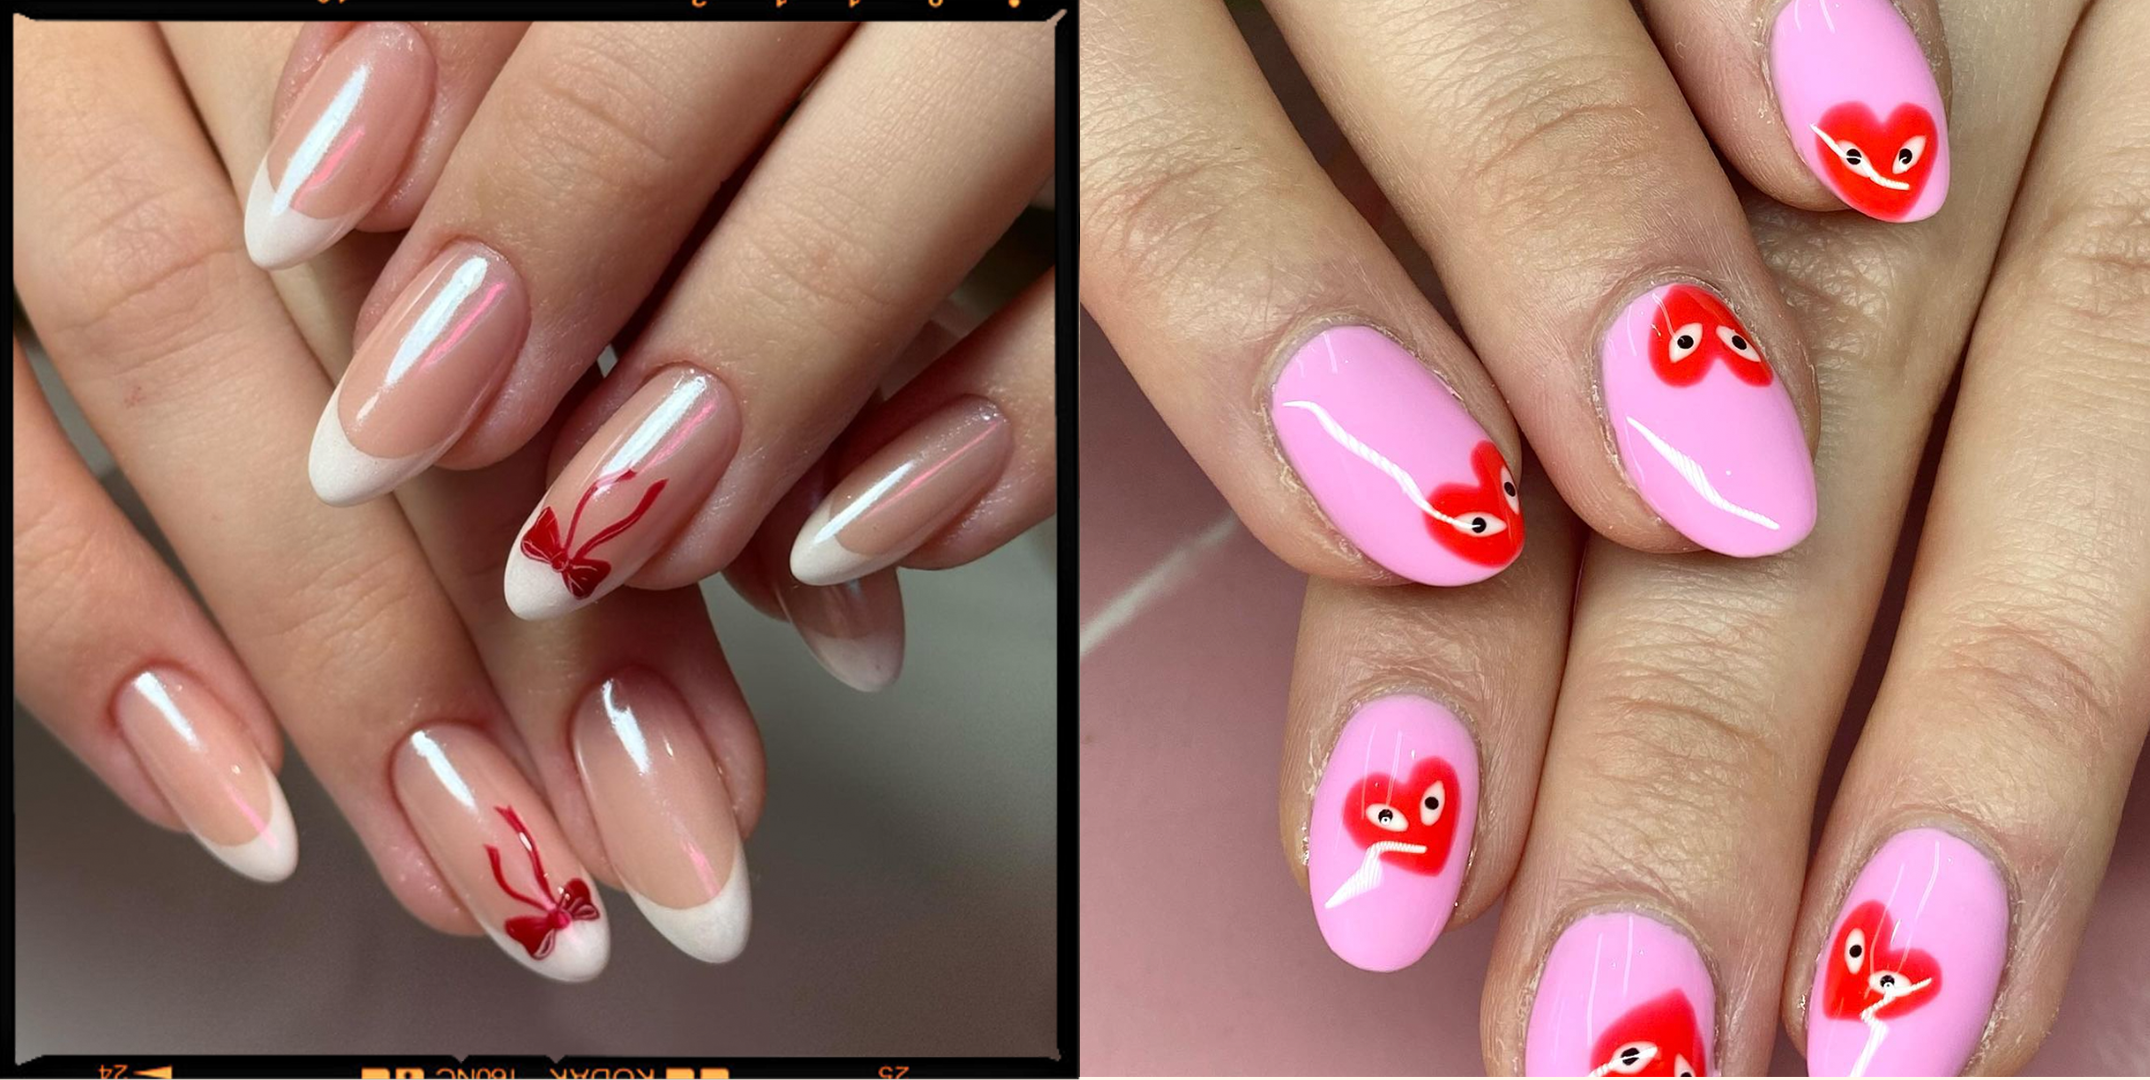 Pinterest | Nails design with rhinestones, Beauty nails design, Stylish nails  art